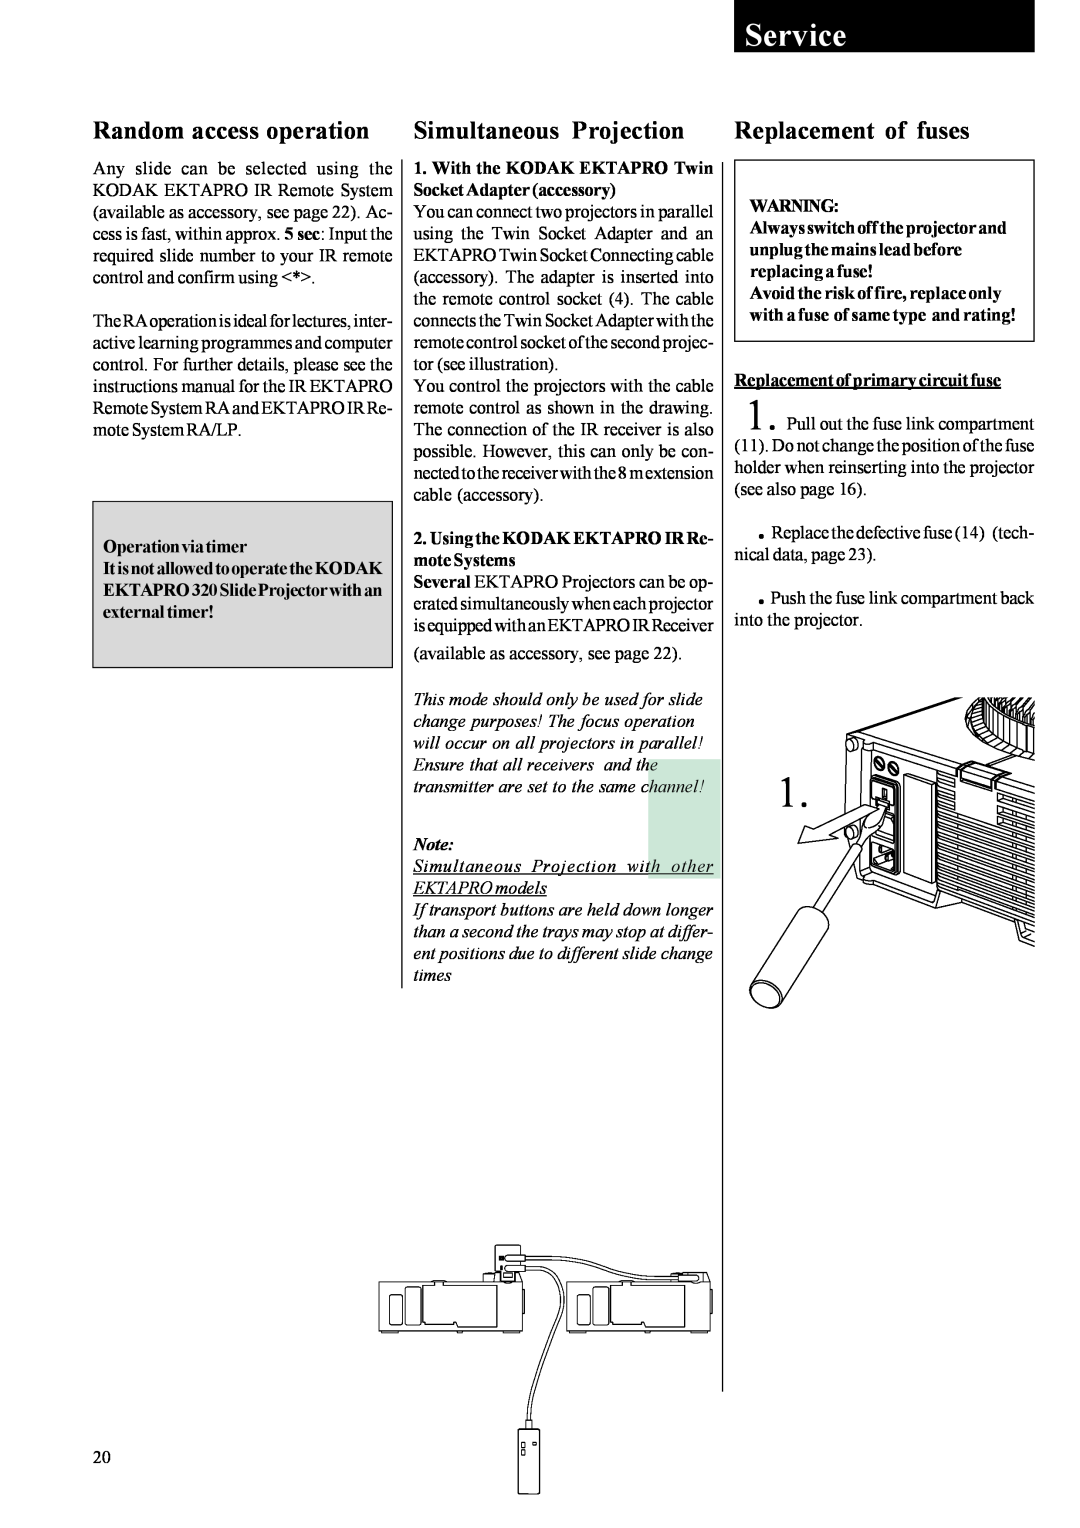 Kodak EKTAPRO Service, Simultaneous Projection, Replacement of fuses, Random access operation, Operationviatimer 